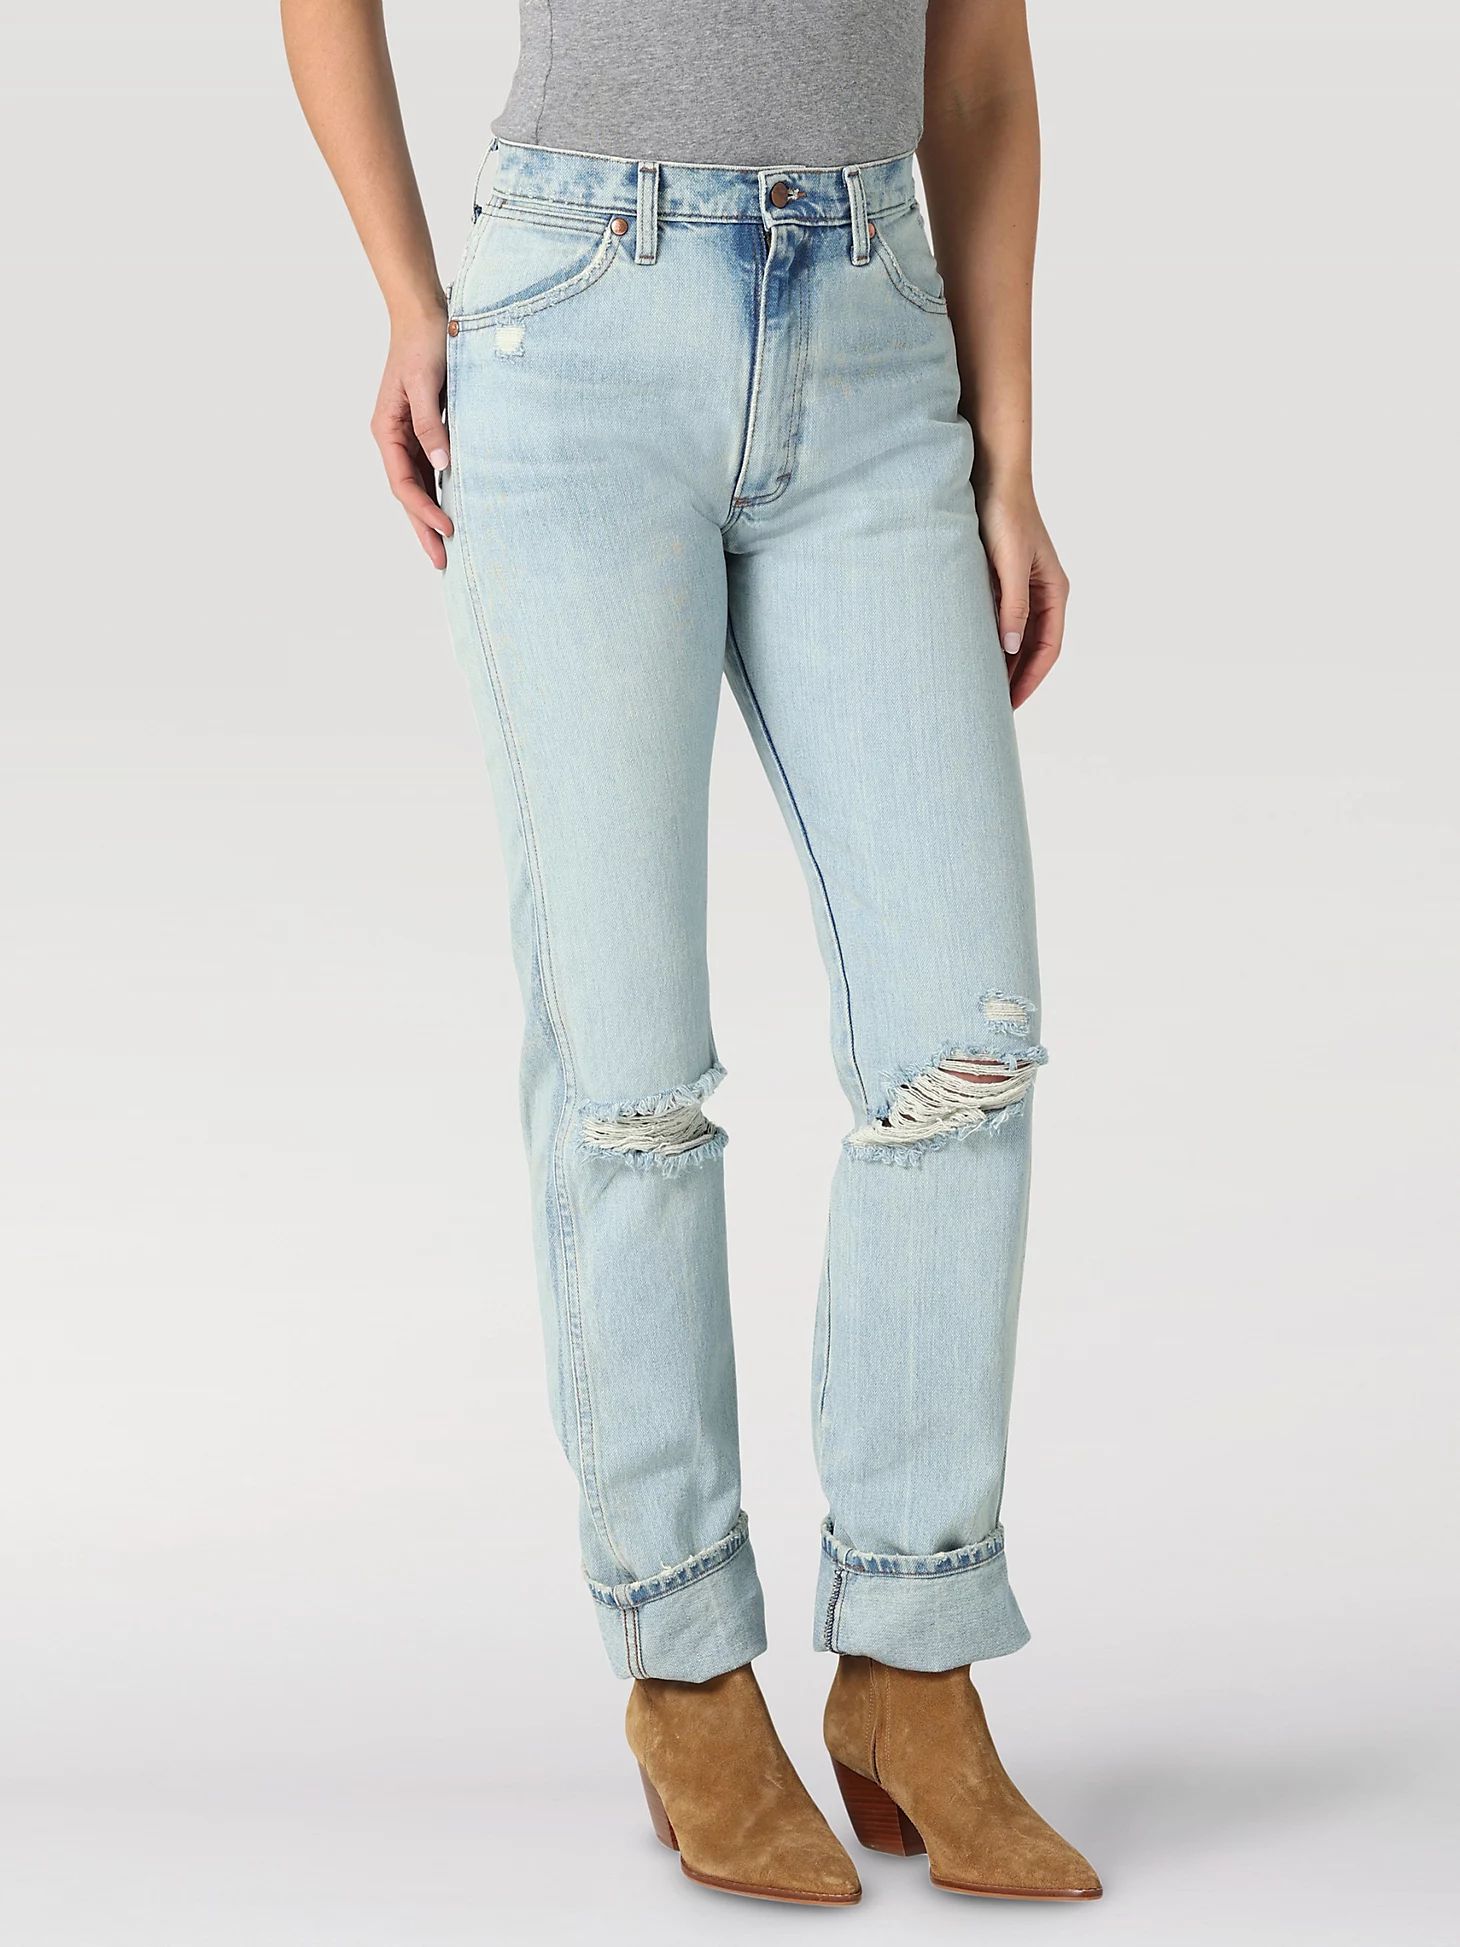 Women's Wrangler® Cowboy Cut® Slim Fit Jean in Distressed Vintage | Wrangler